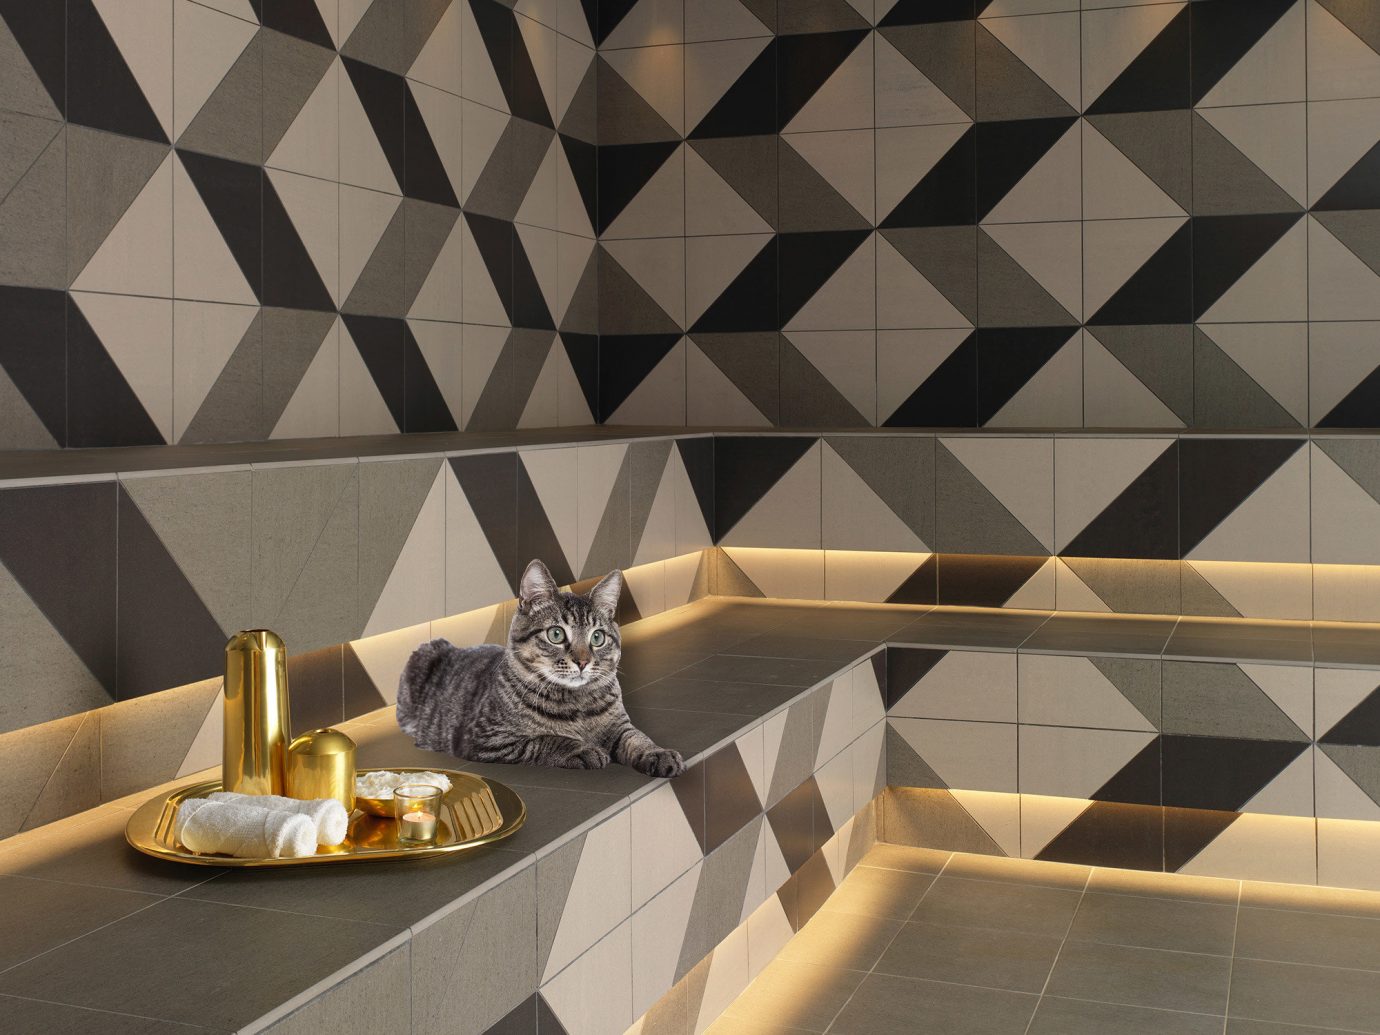 Hotels room tile floor wall flooring Design ceiling daylighting bathroom interior design tiled shape pattern symmetry wallpaper